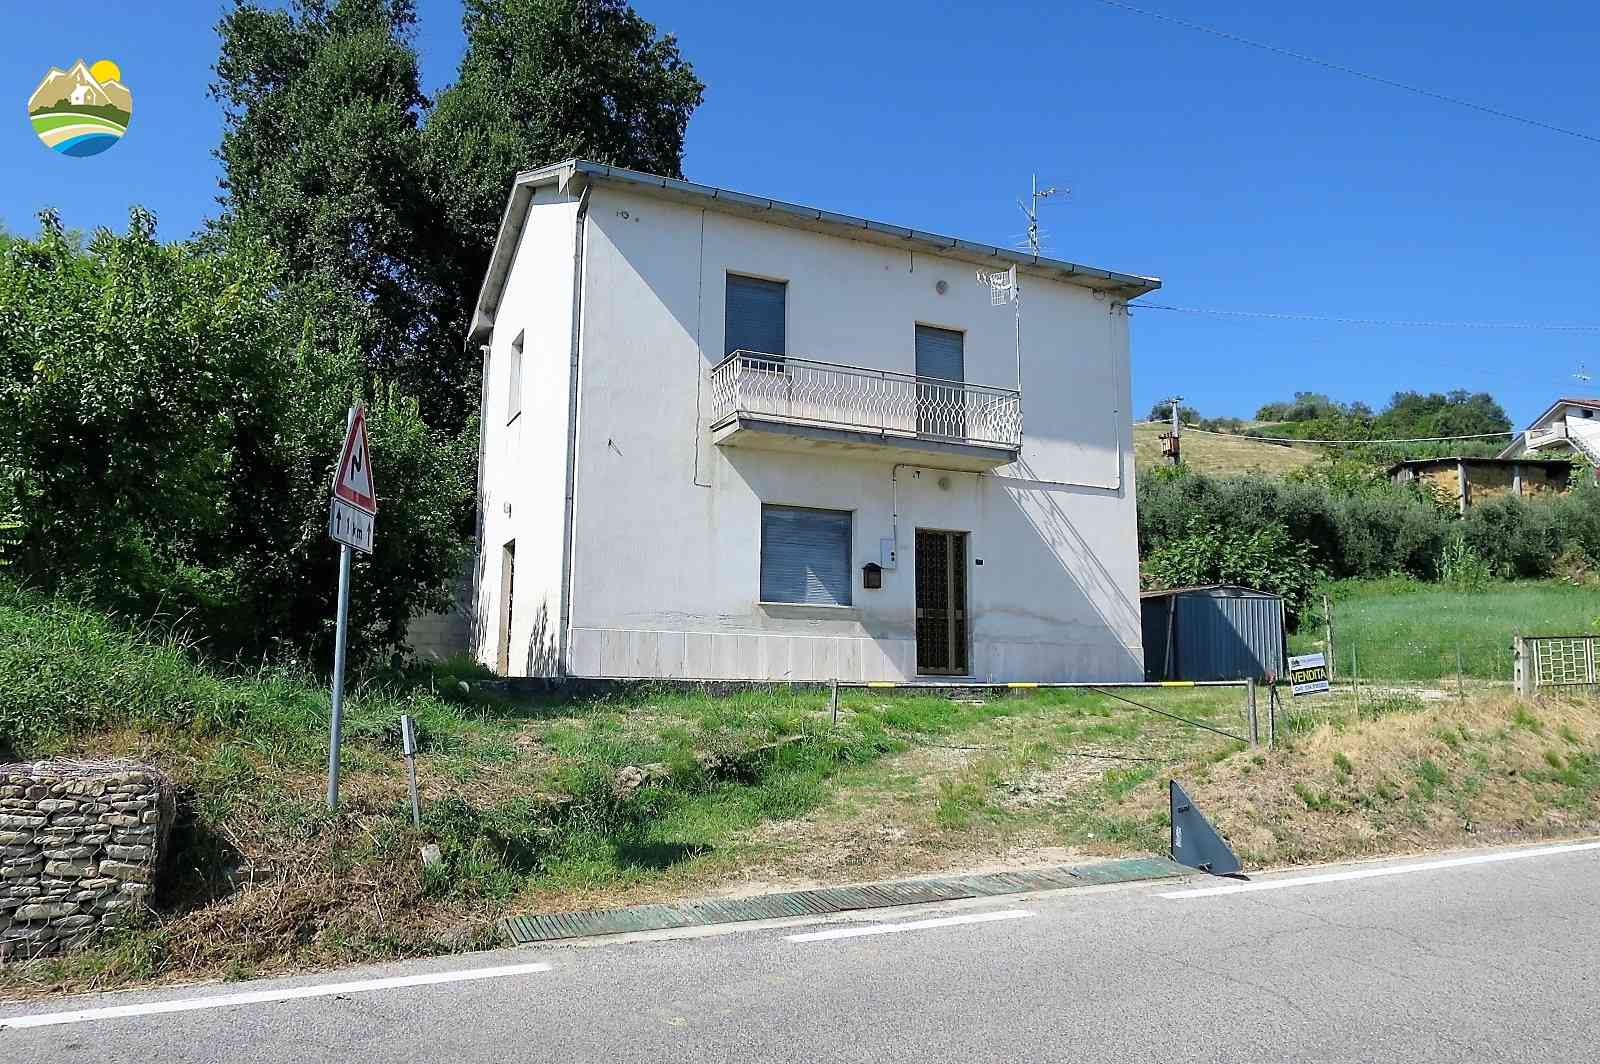 Country Houses Country Houses for sale Cellino Attanasio (TE), Casa 81 - Cellino Attanasio - EUR 80.438 10